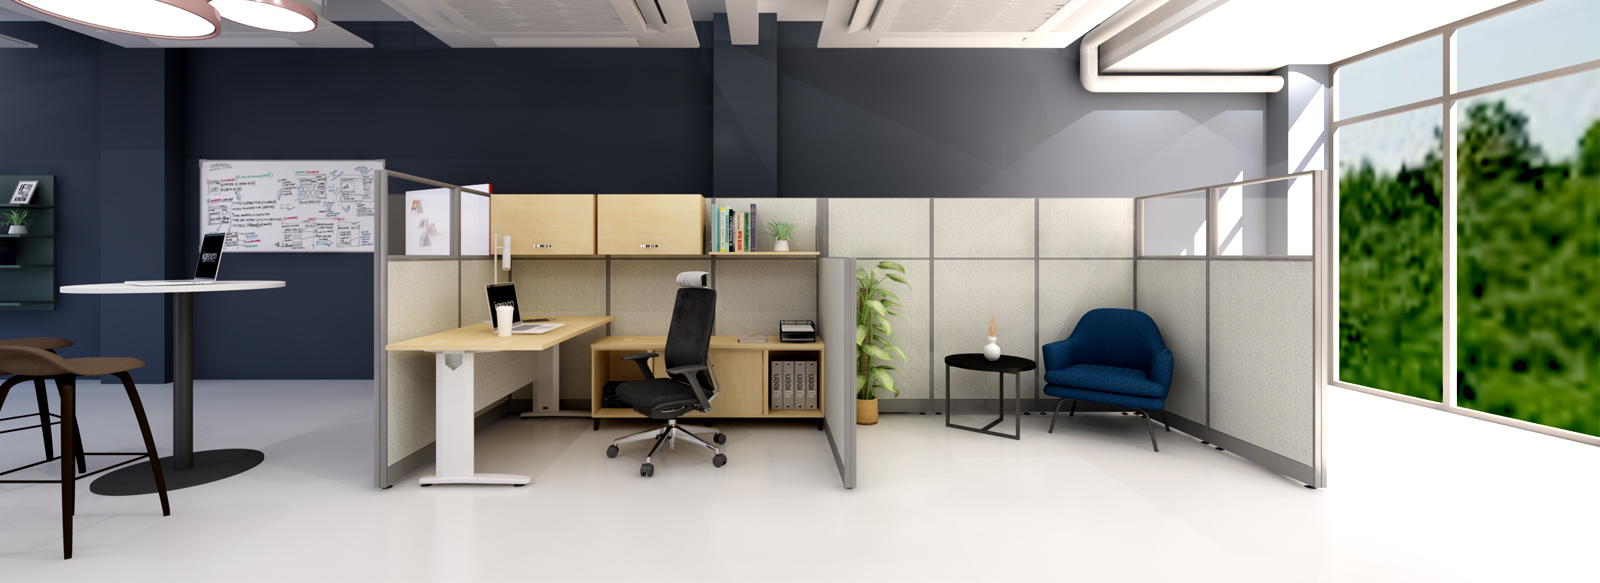 Pentagon Modern Executive Office Room Concept Malaysia